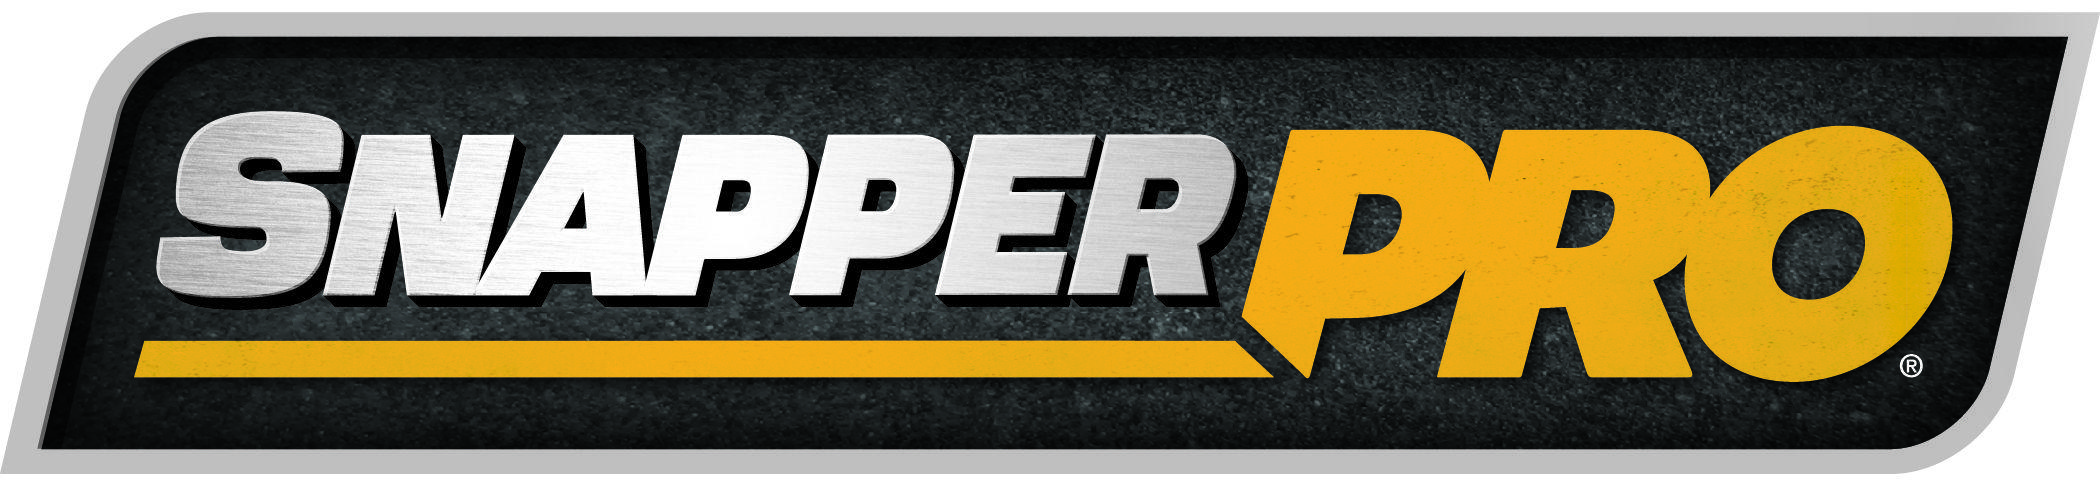 Snapper Logo - Snapper Pro JPEG Logos